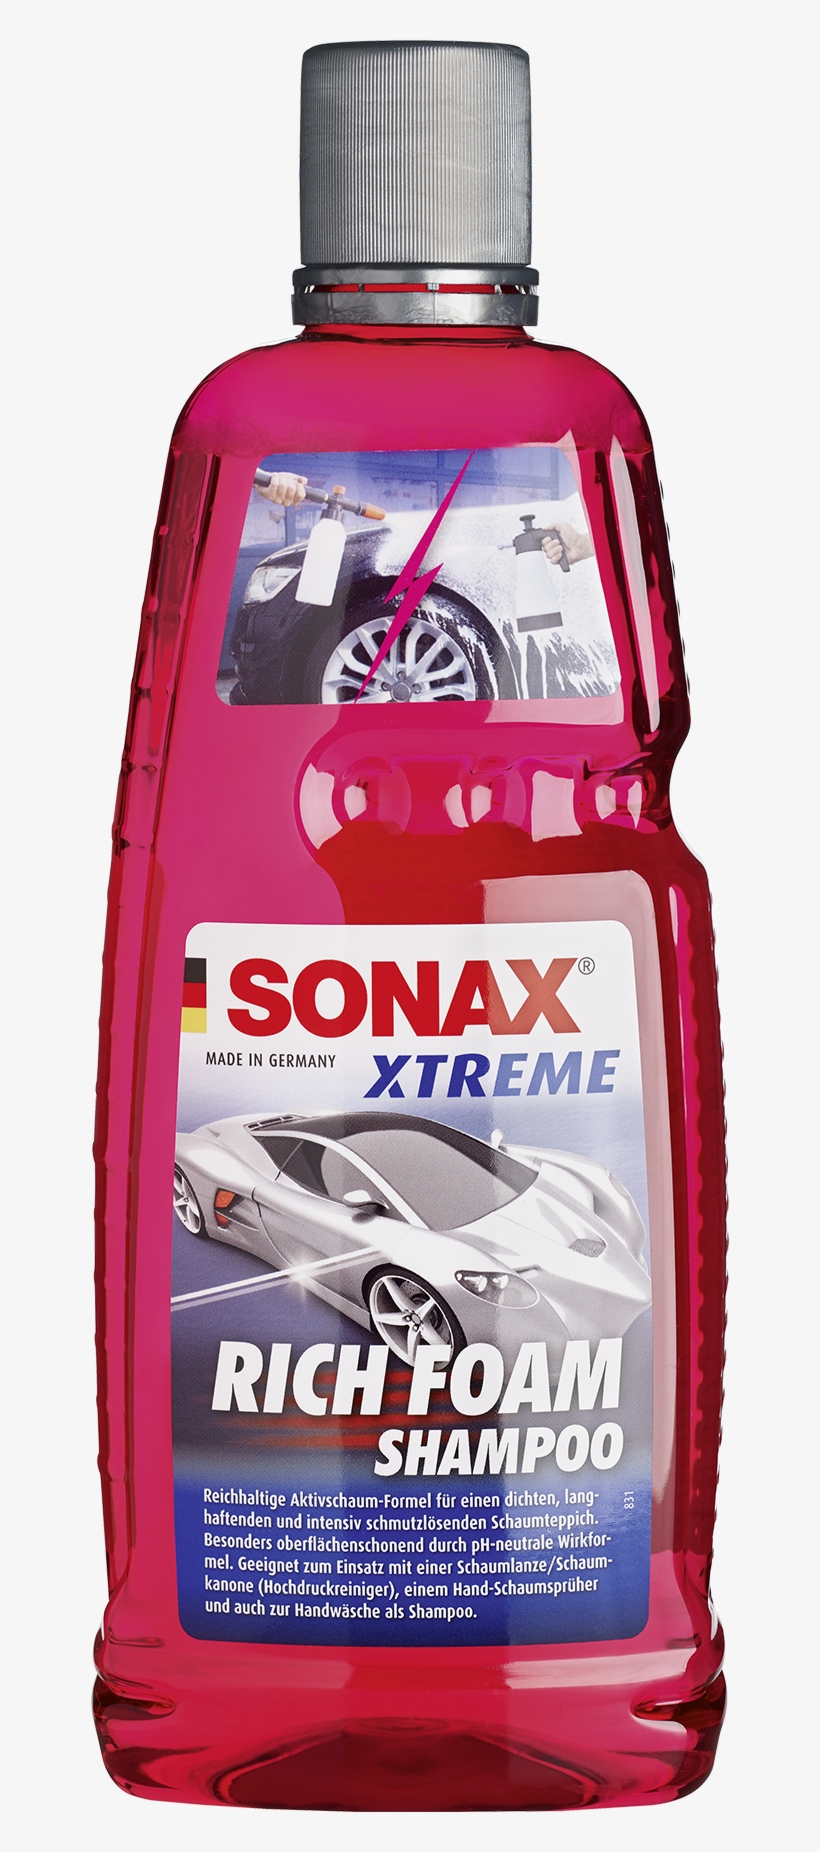 Sonax Xtreme Richfoam Shampoo - Sonax Gmbh Sonax 215300 Xtreme Shampoo 2, transparent png #5543300